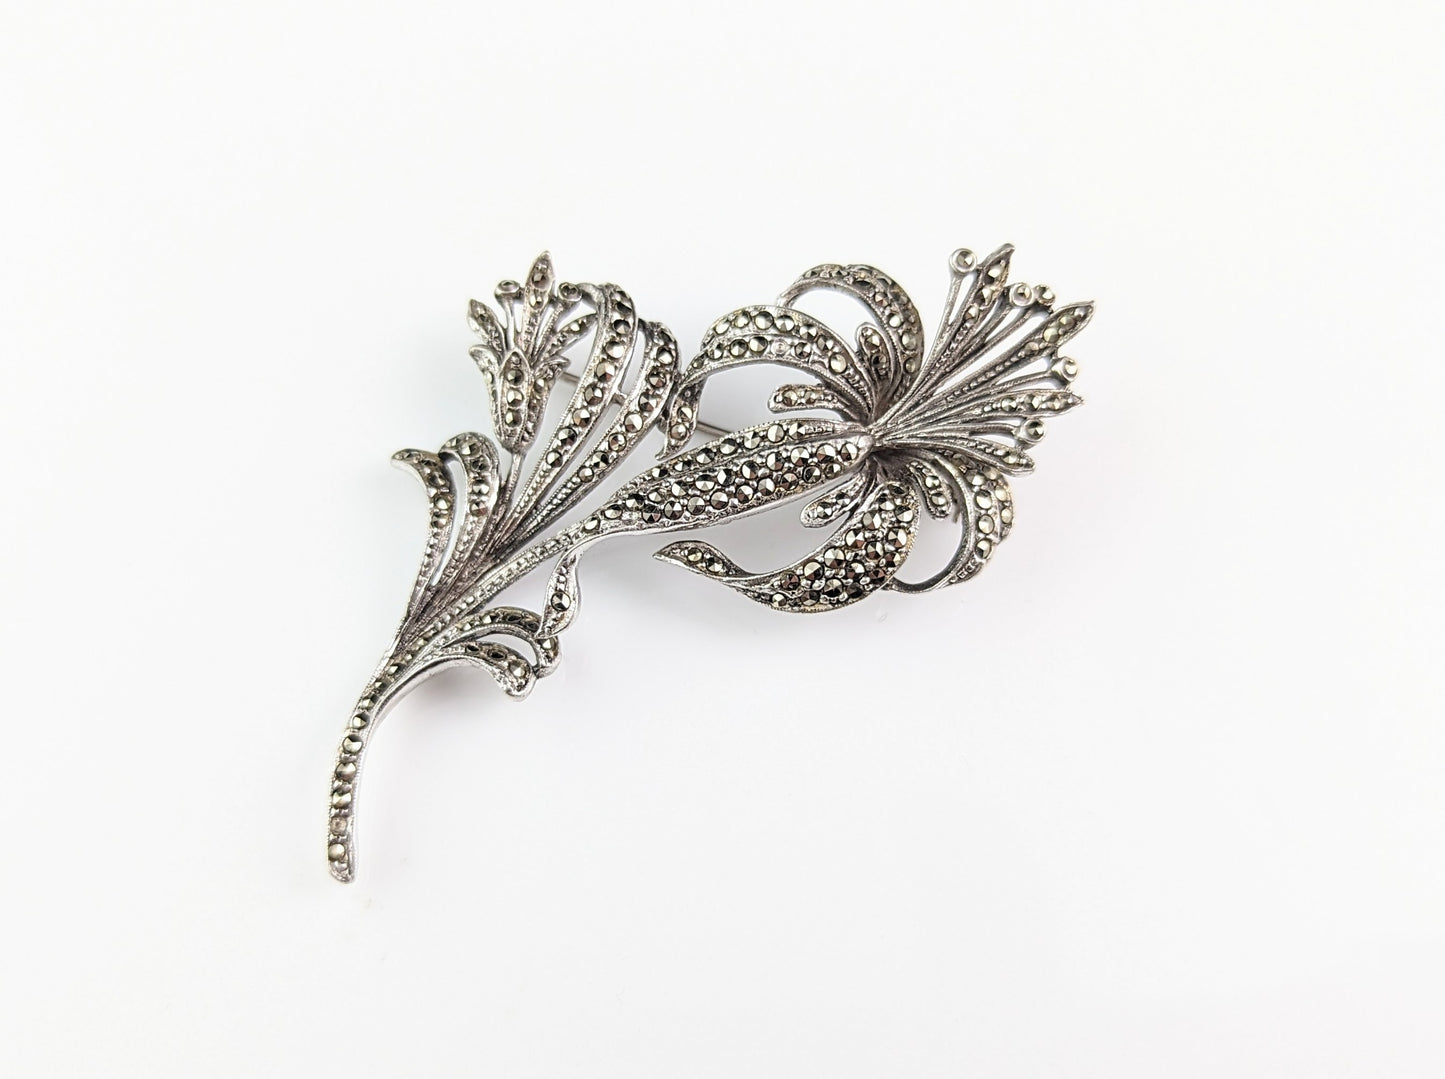 Vintage sterling silver and marcasite flower brooch, large